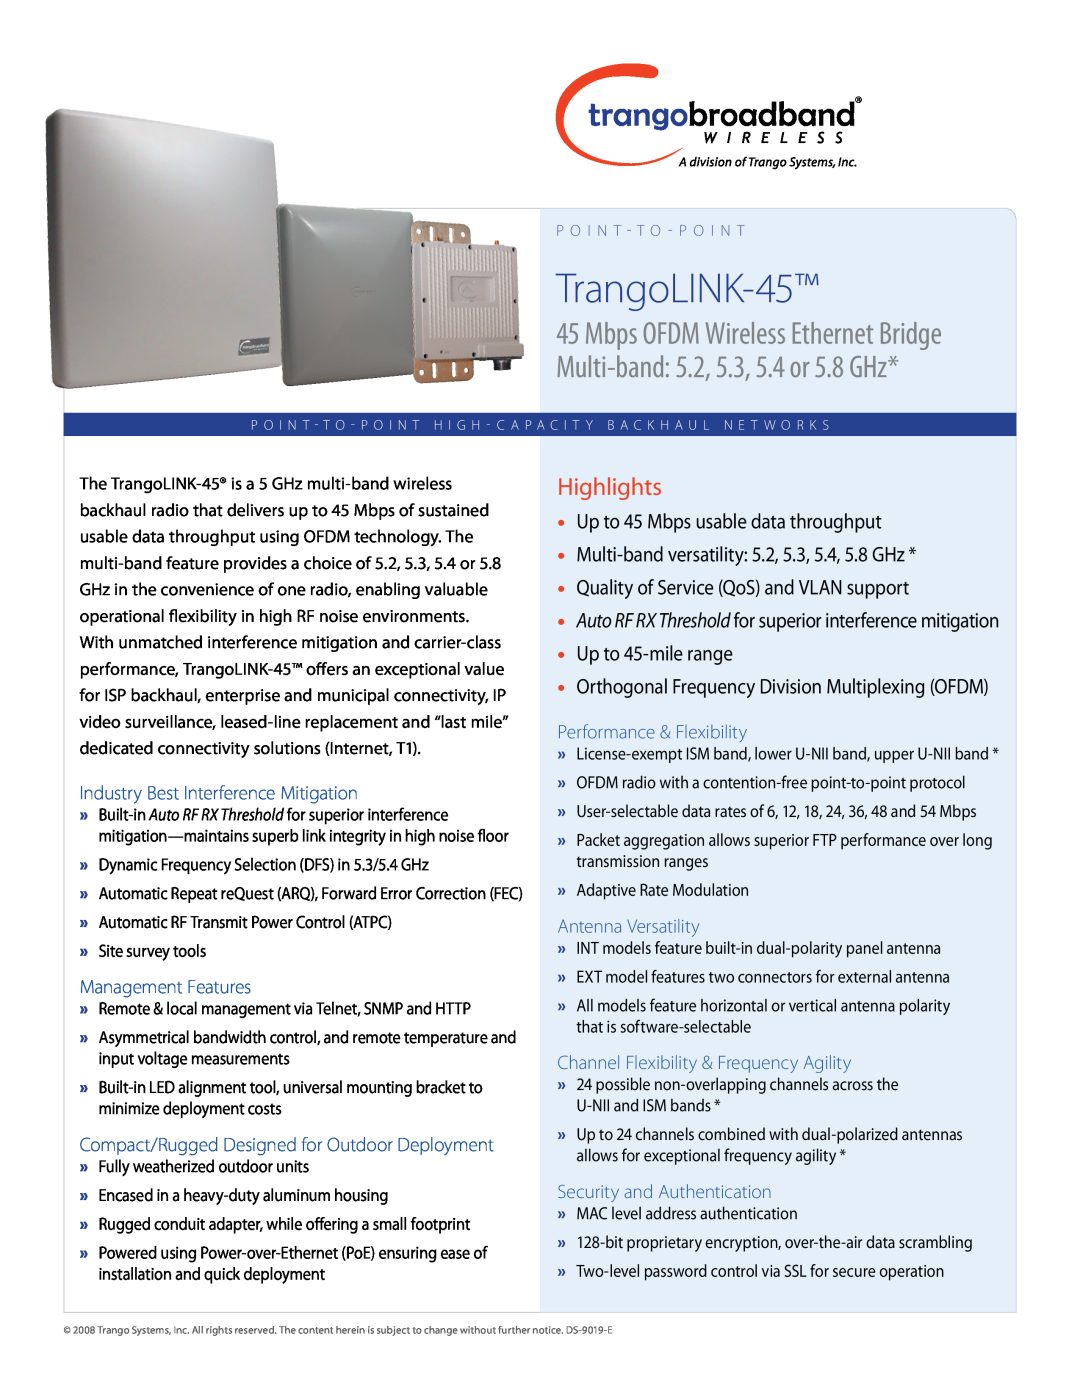 Trango Broadband TrangoLink-45 manual Industry Best Interference mitigation, management Features, antenna Versatility 